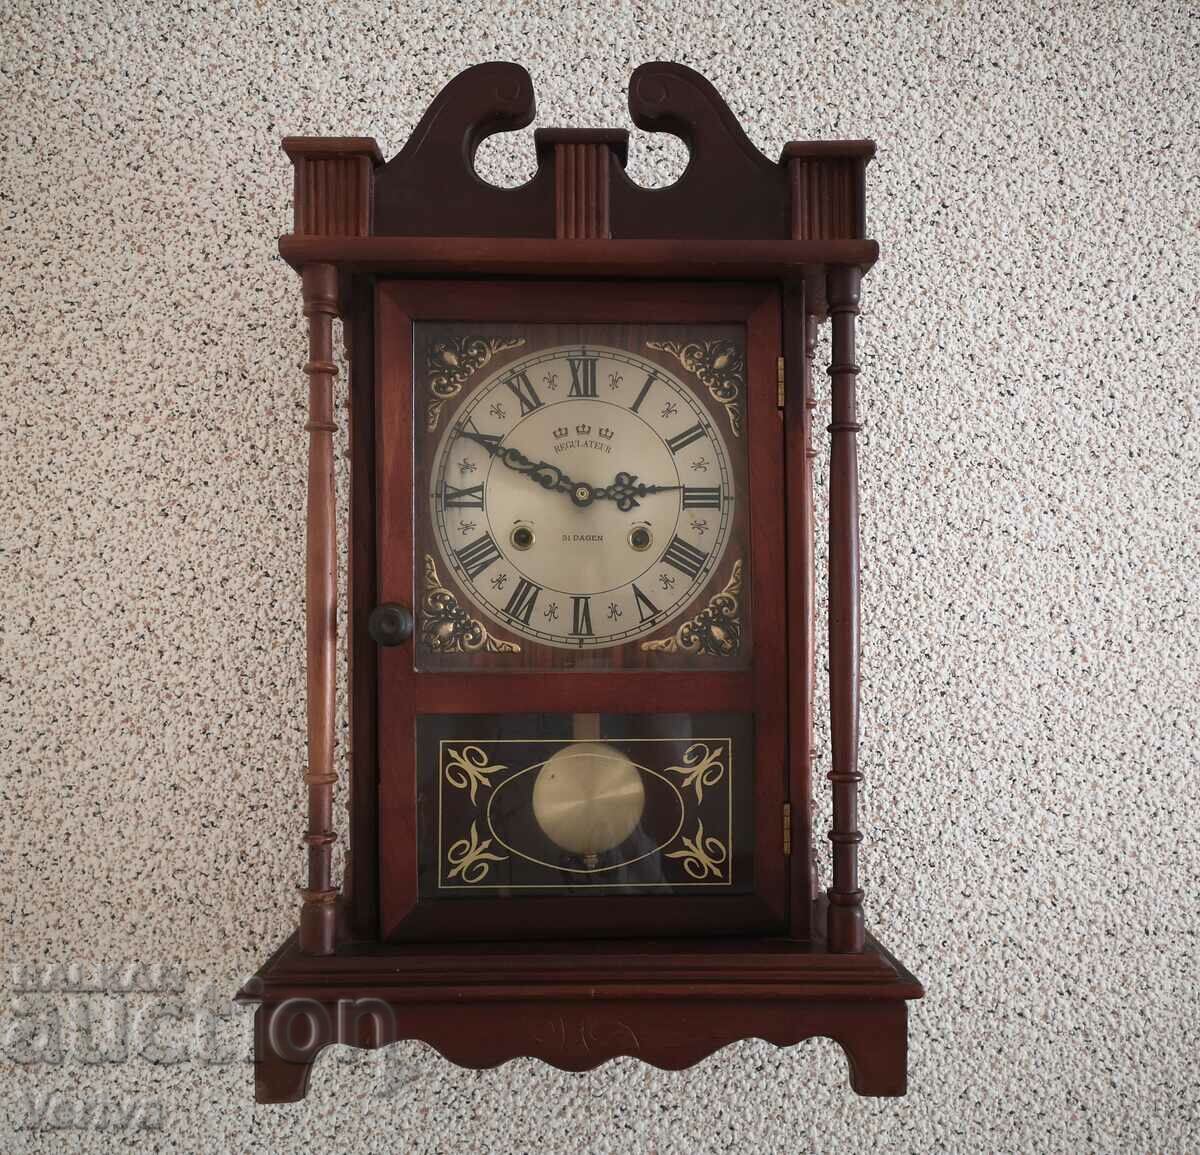 Large and very beautiful mantel clock - regulator!